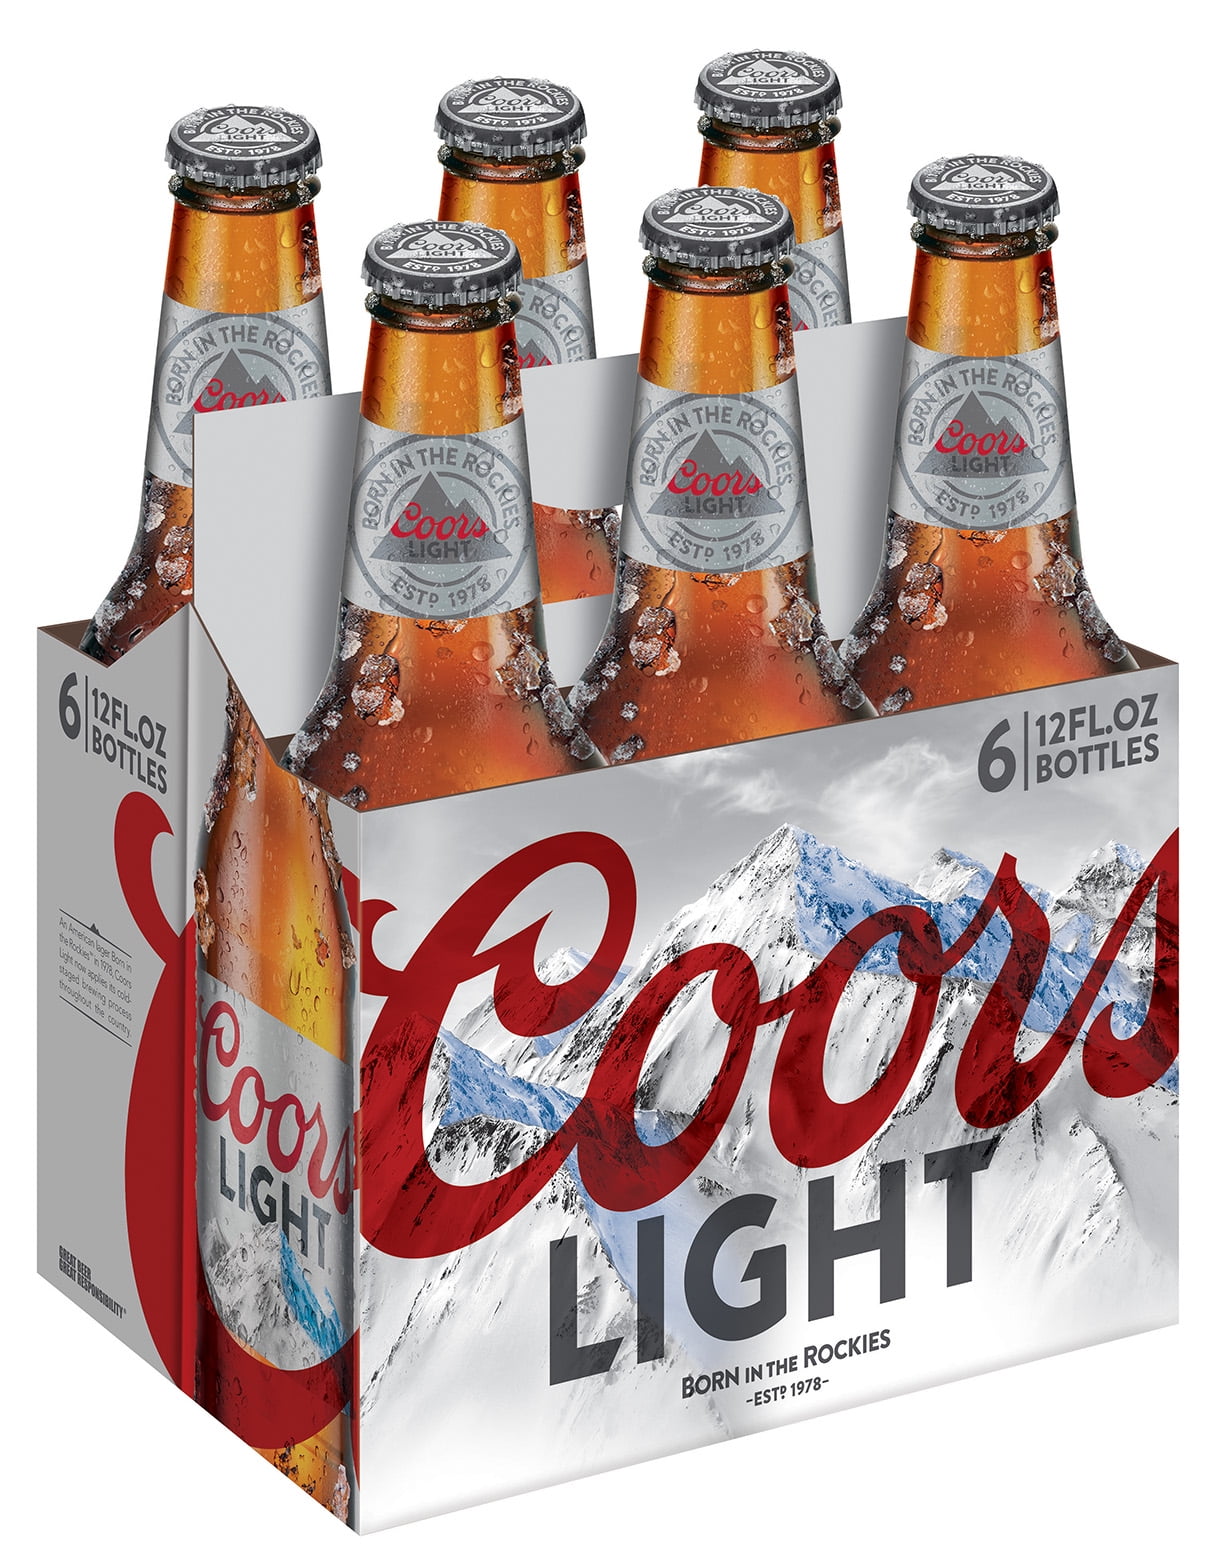 Coors Light Beer American Light Lager 6 Pack Beer 12 Fl Oz Bottles Walmart ...